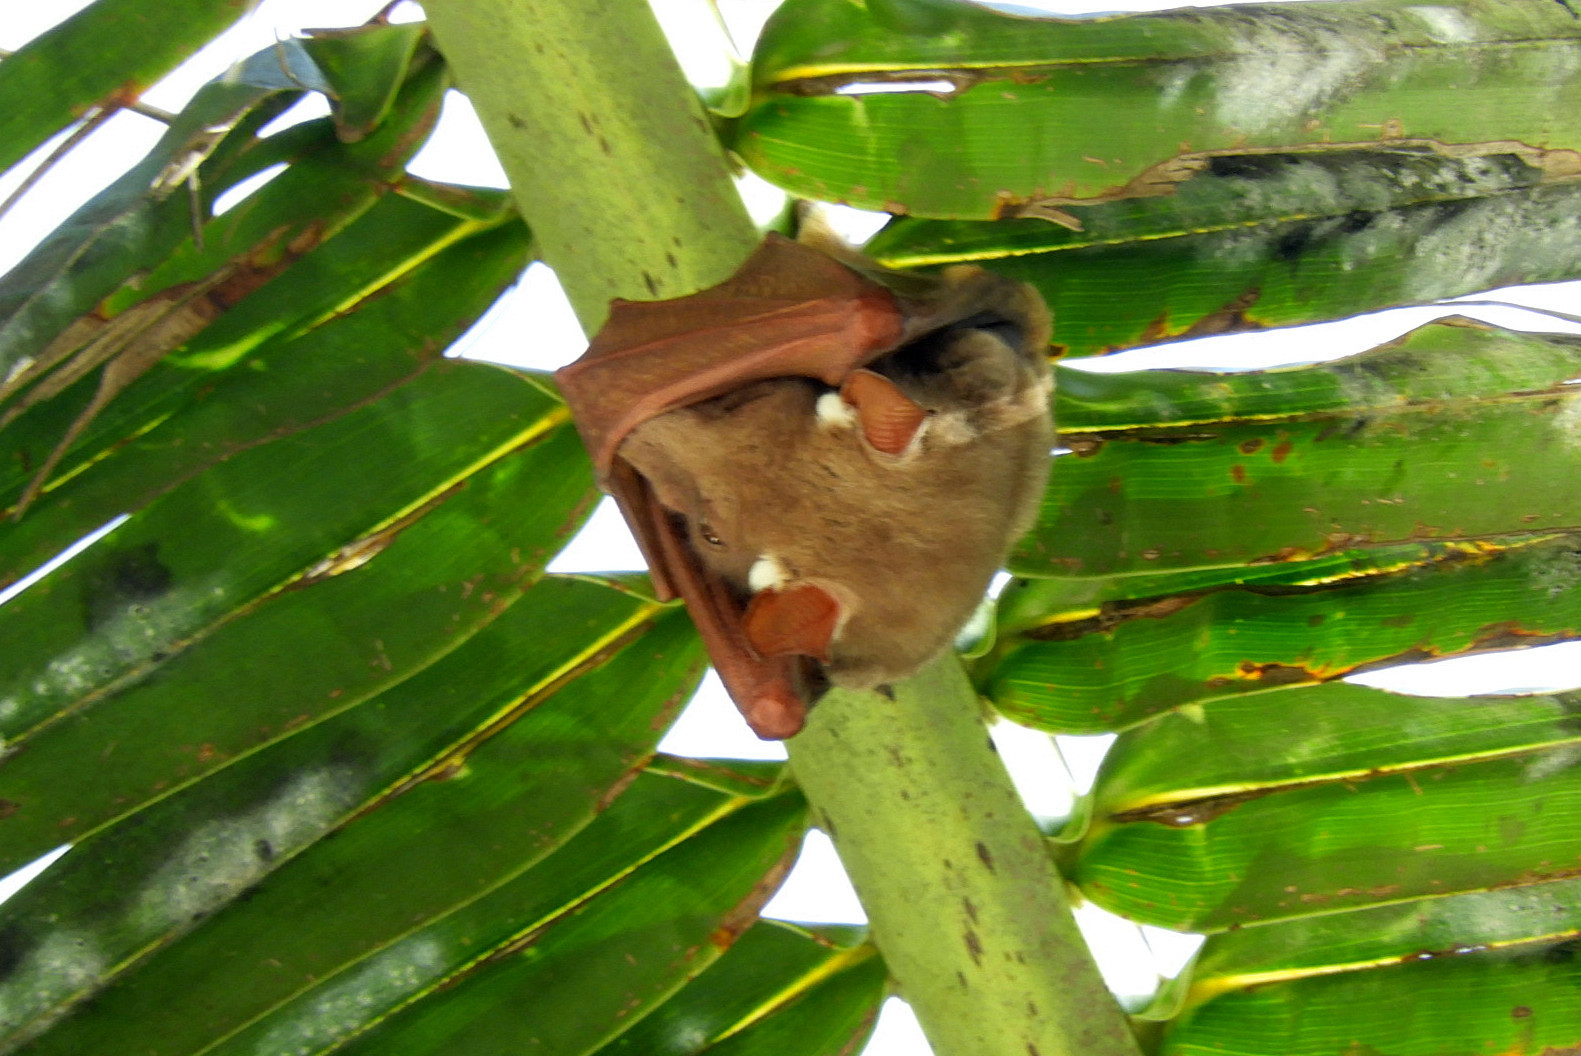 Image of Wahlberg's Epauletted Fruit Bat